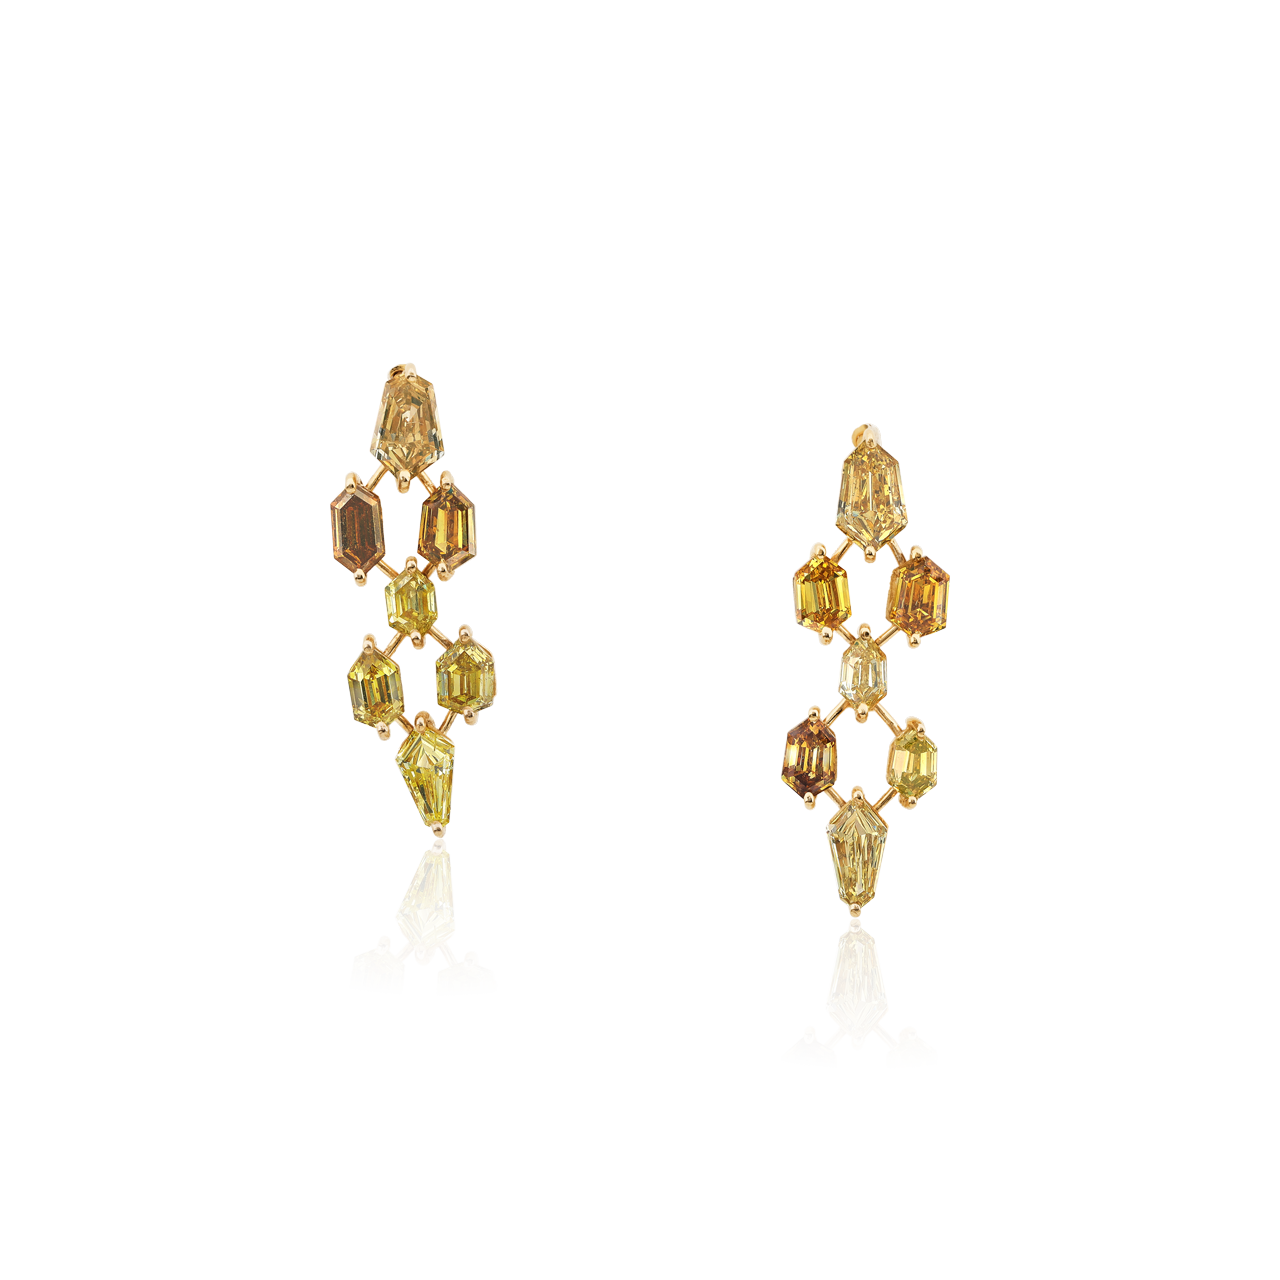 2.82克拉 黃彩鑽耳環
Yellow Colored Diamond
and Diamond Earrings